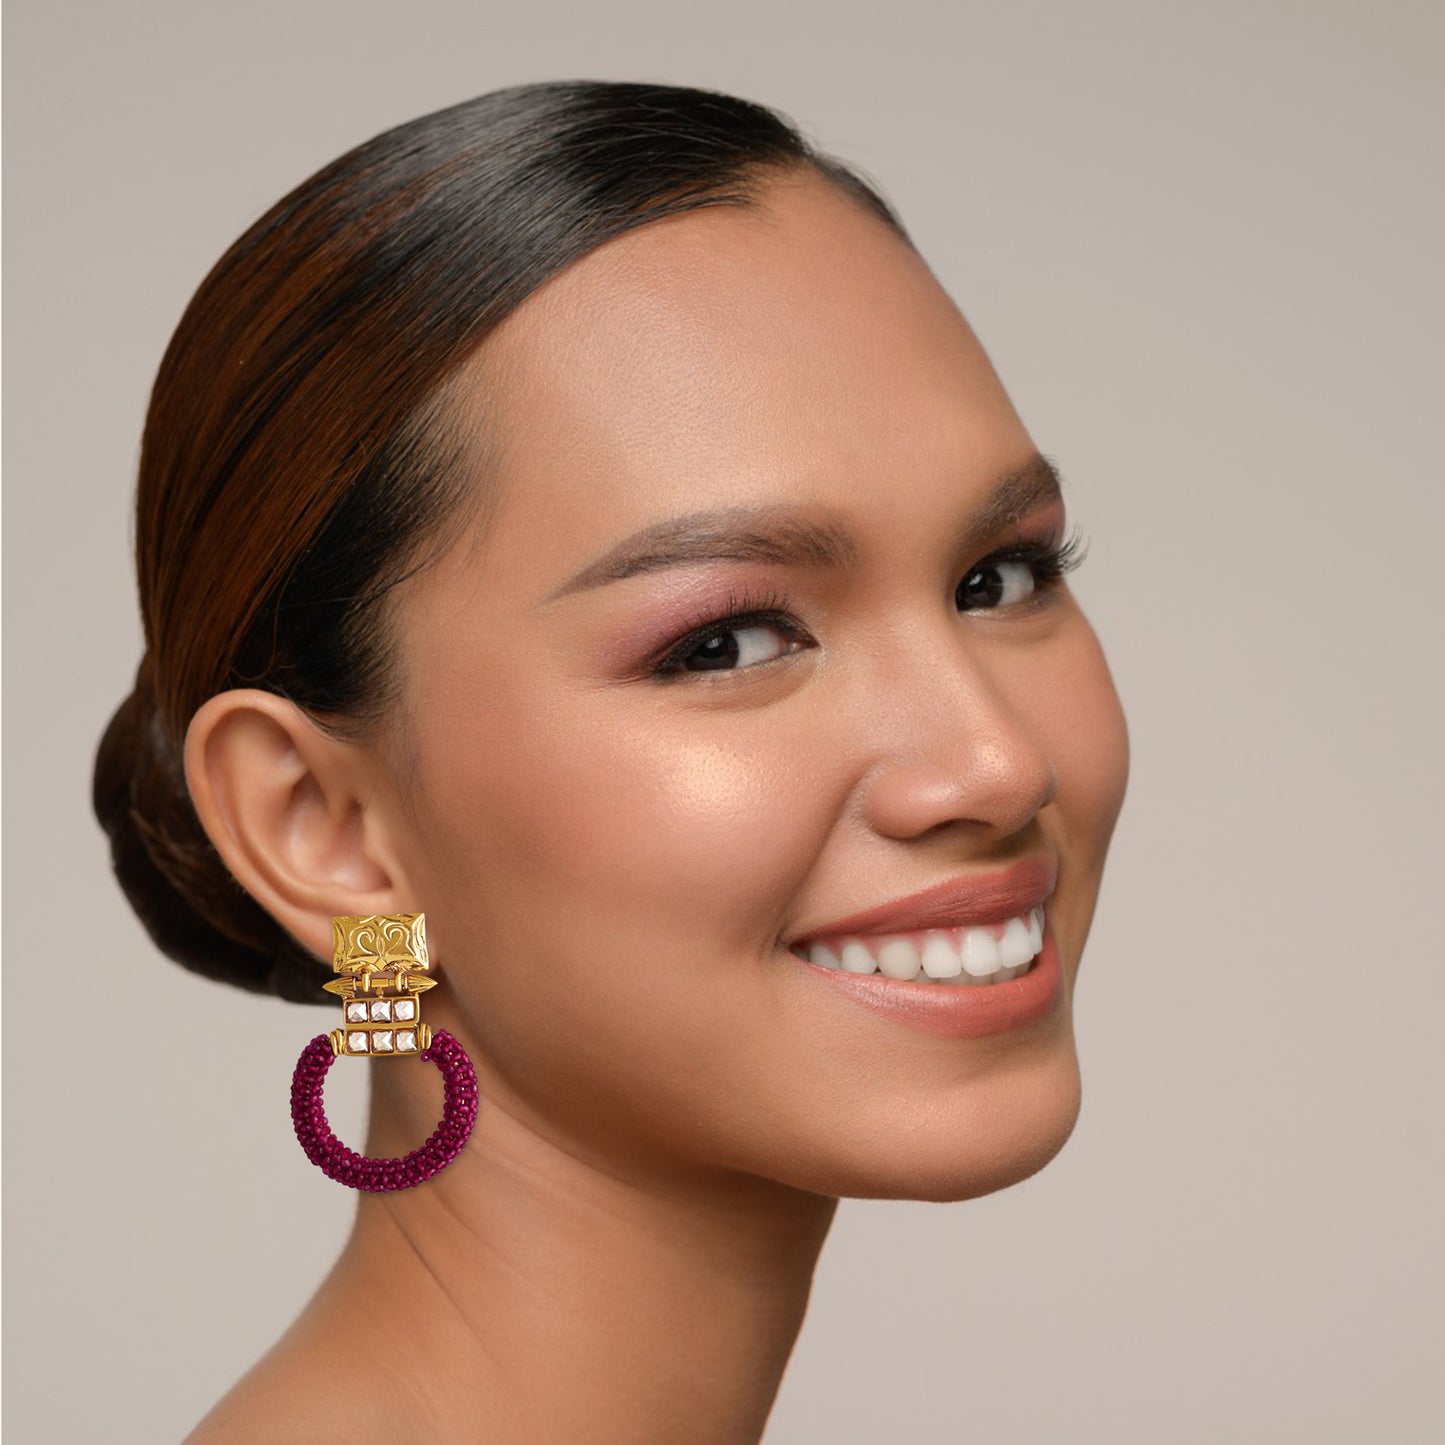 Bdiva 18K Gold Plated Kundan Pink Beads Earrings.